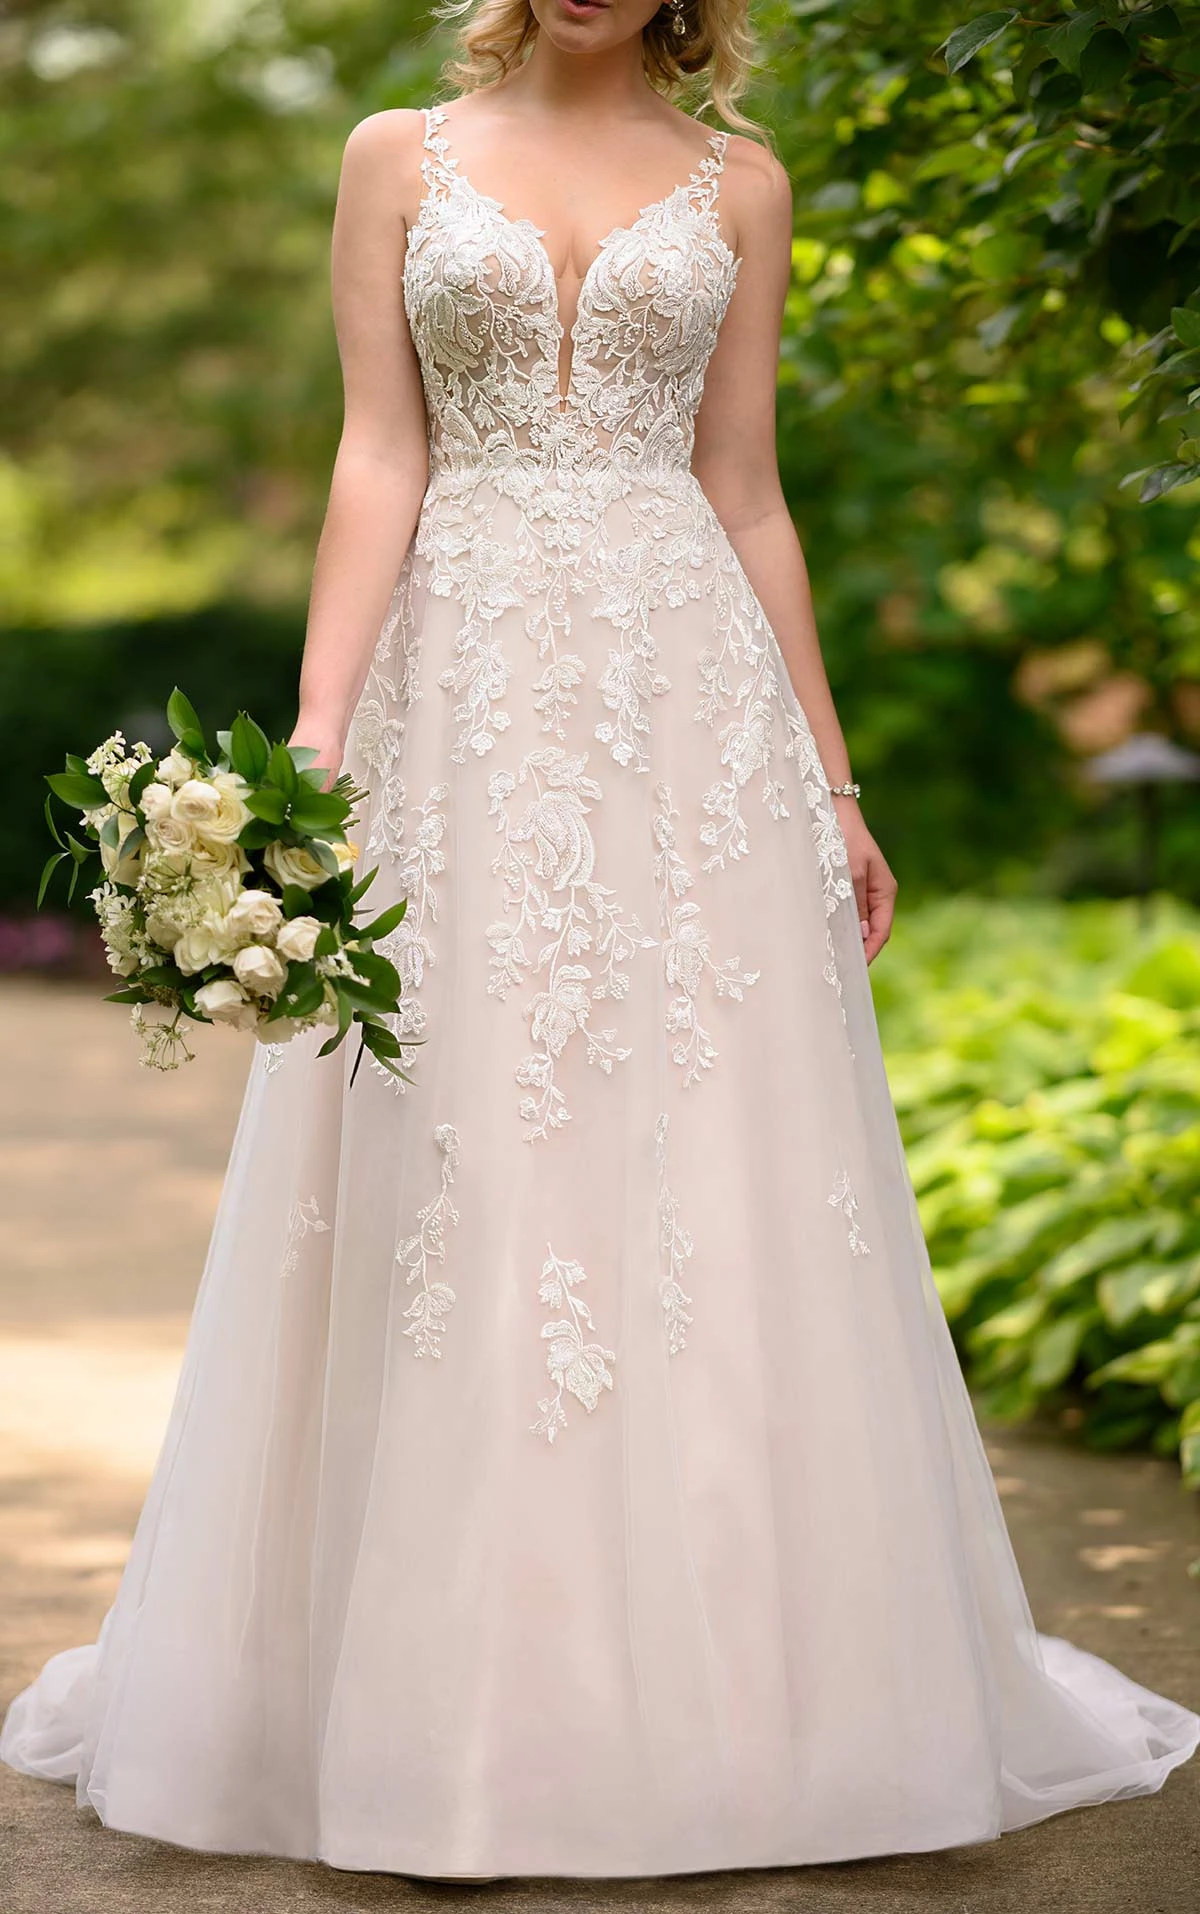 A Line Tulle Wedding Dress Sheer Wedding Dress Ivory wedding dress Wedding Dress with Train Ivory Wedding Gown Sheer Wedding dress